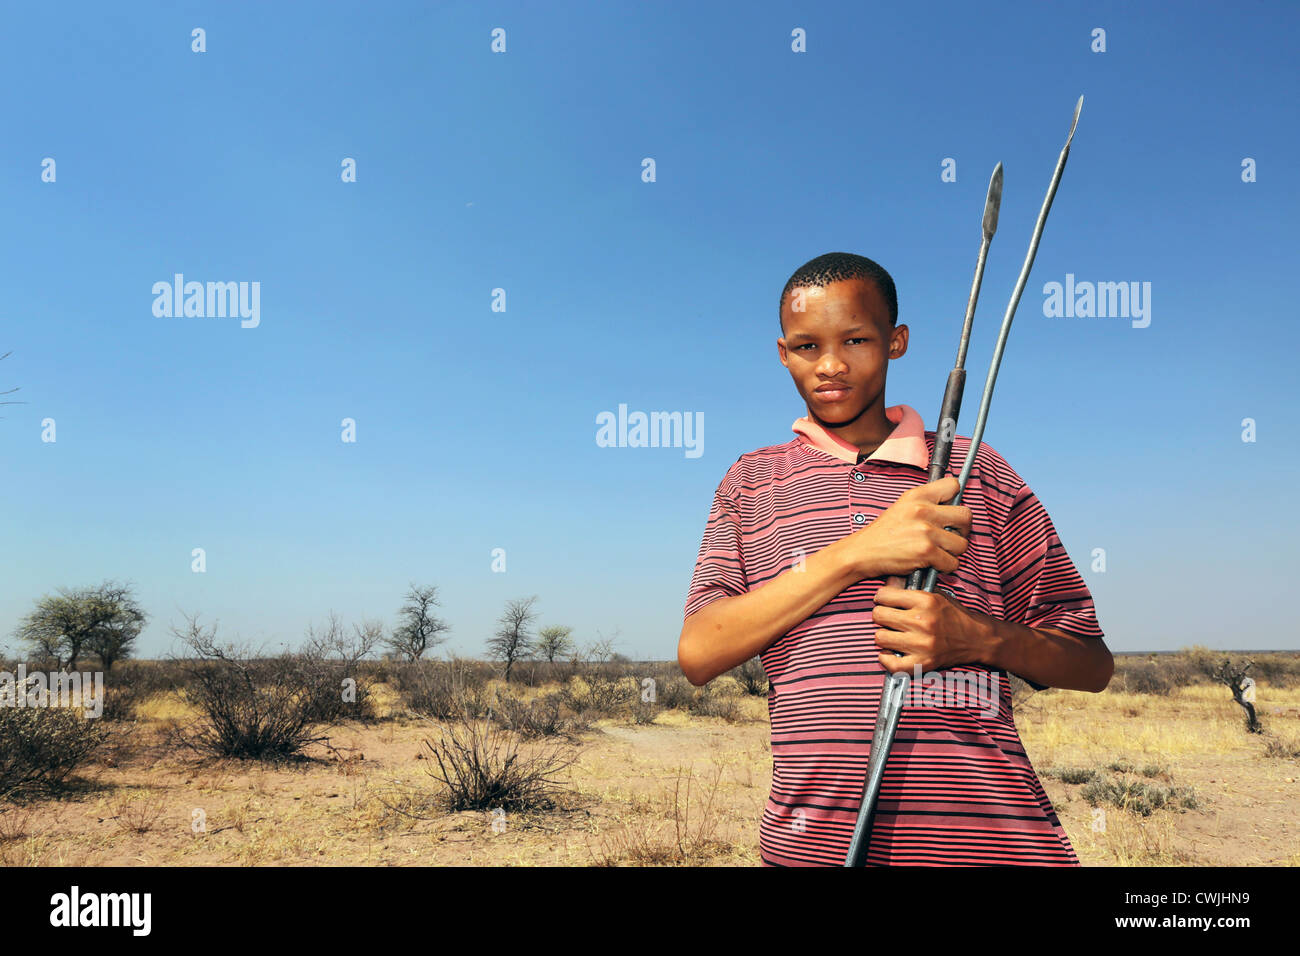 Boy of the indigenous San tribe with spears, Namibia, Kalahari desert Stock Photo